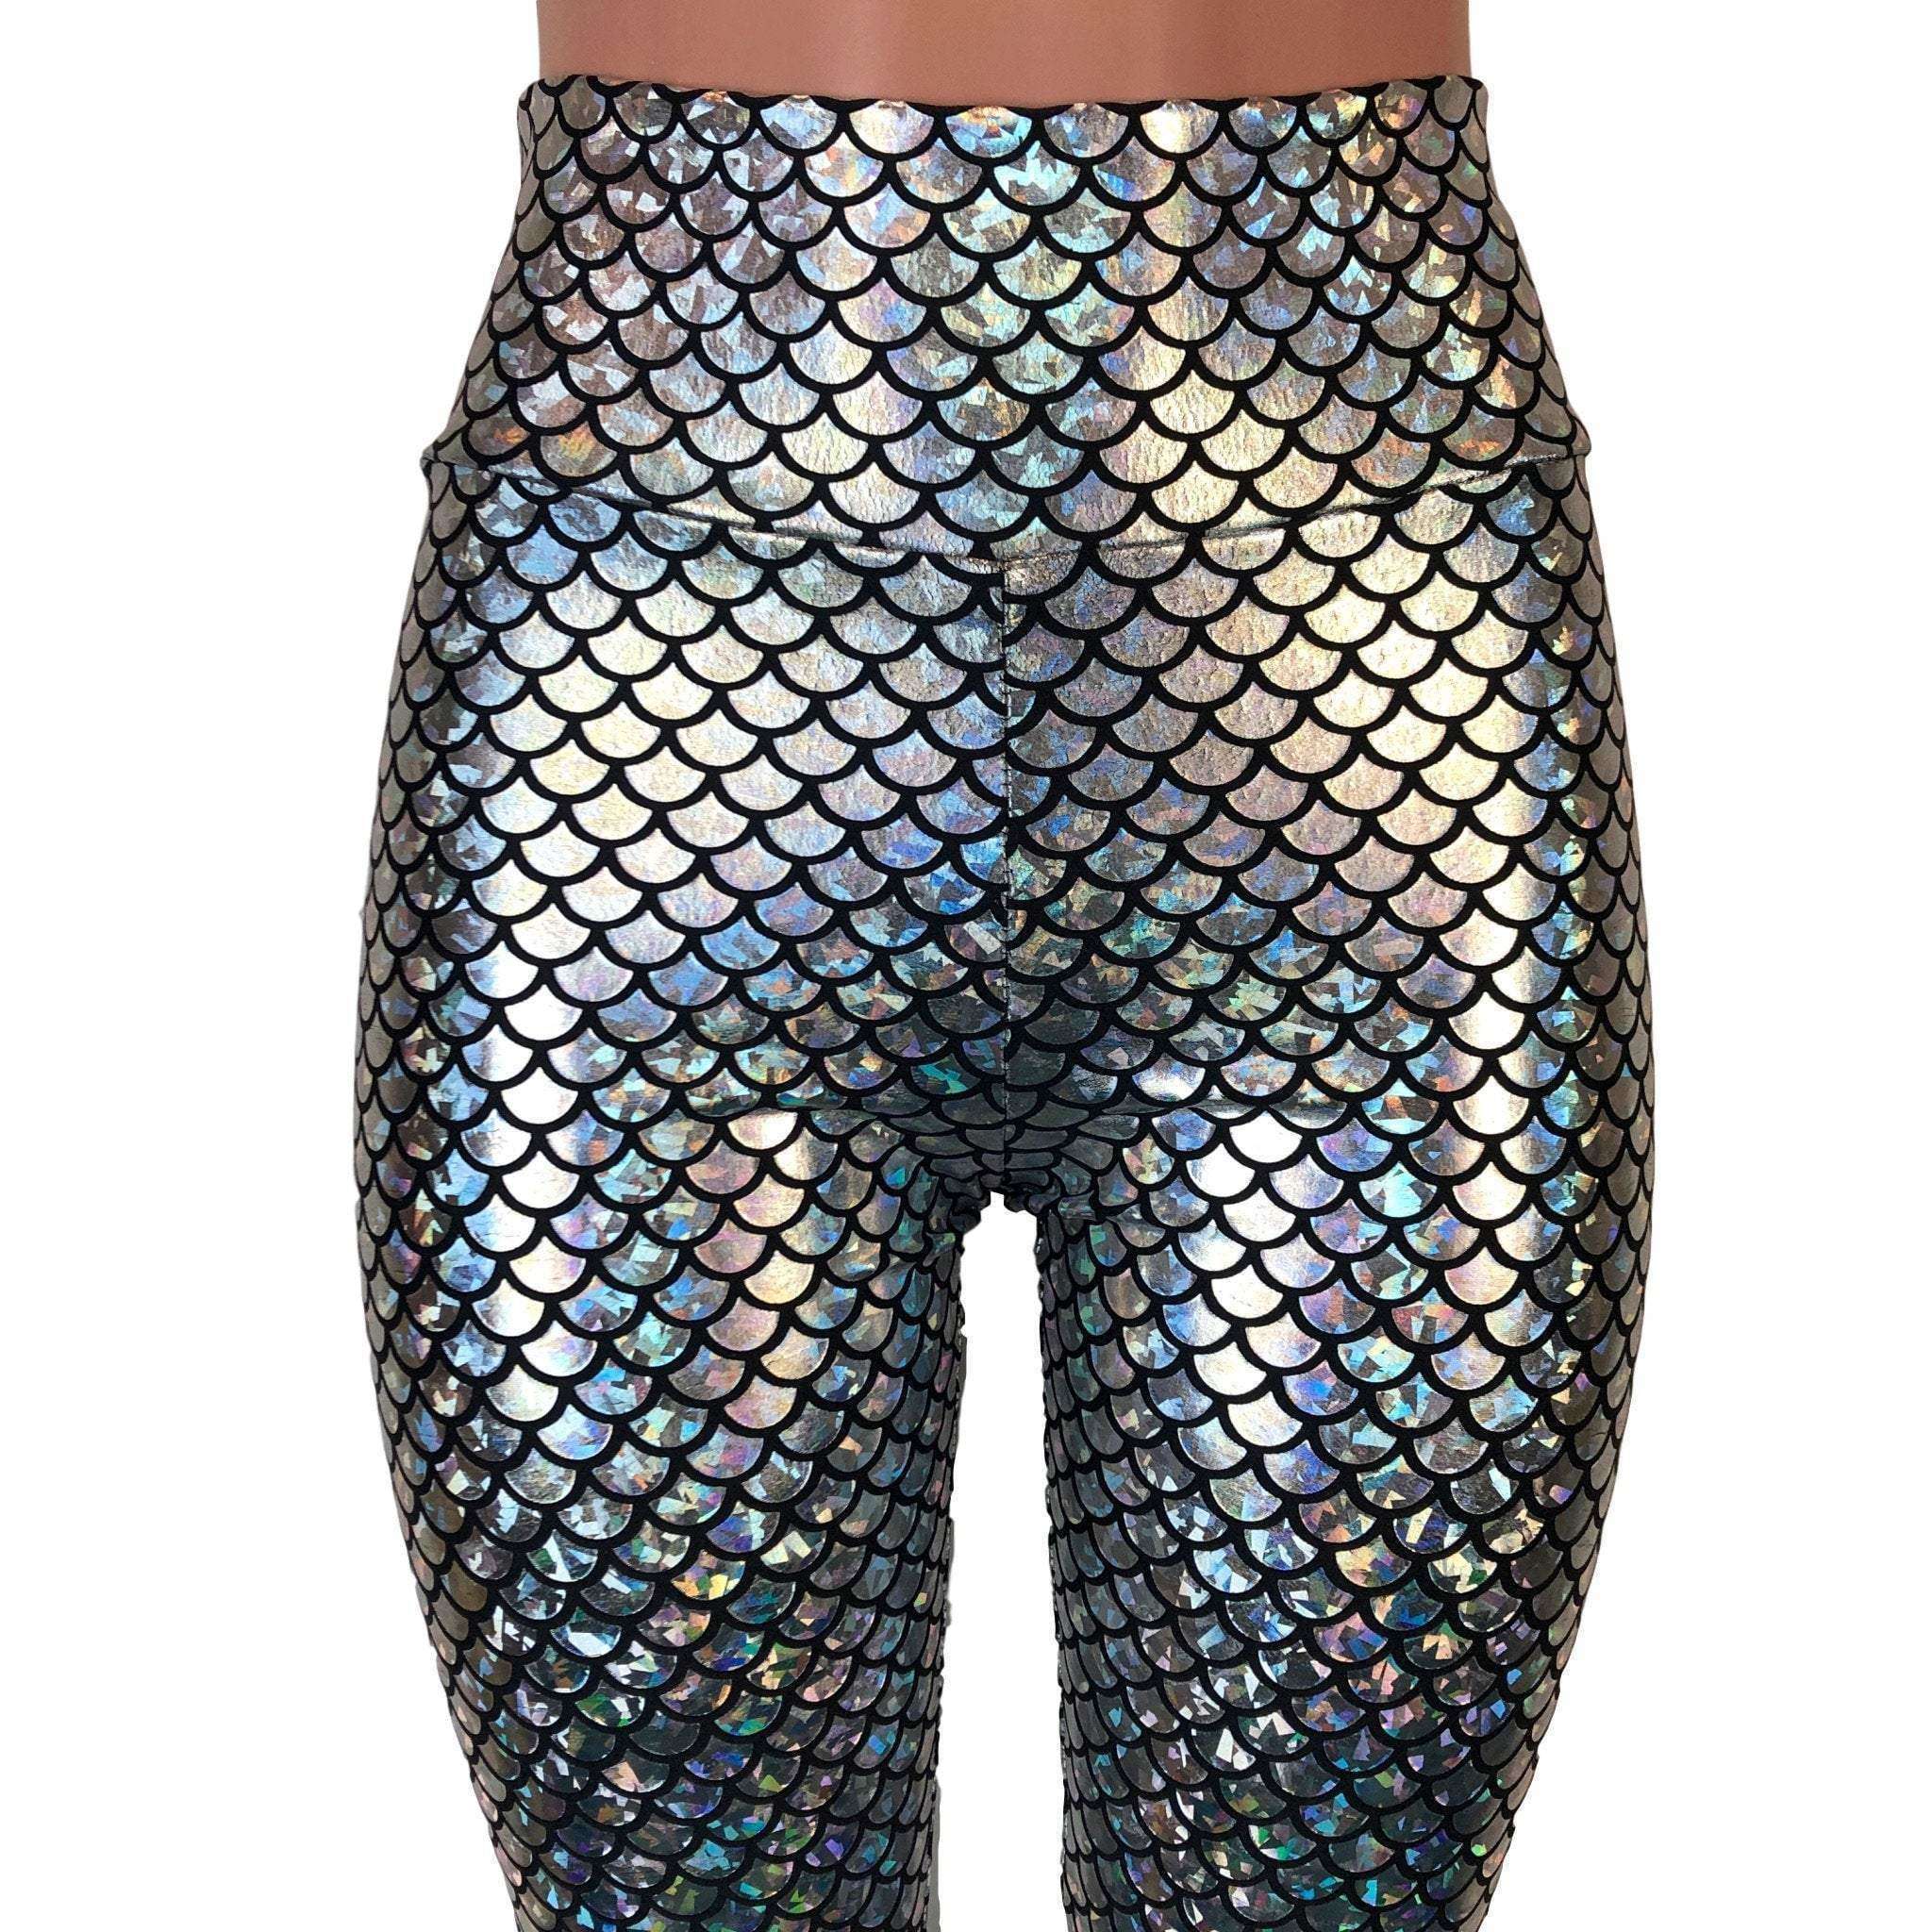 Ladies New Holographic Mermaid Fish Scale Metallic Shiny Stretchy Leggings  Pants